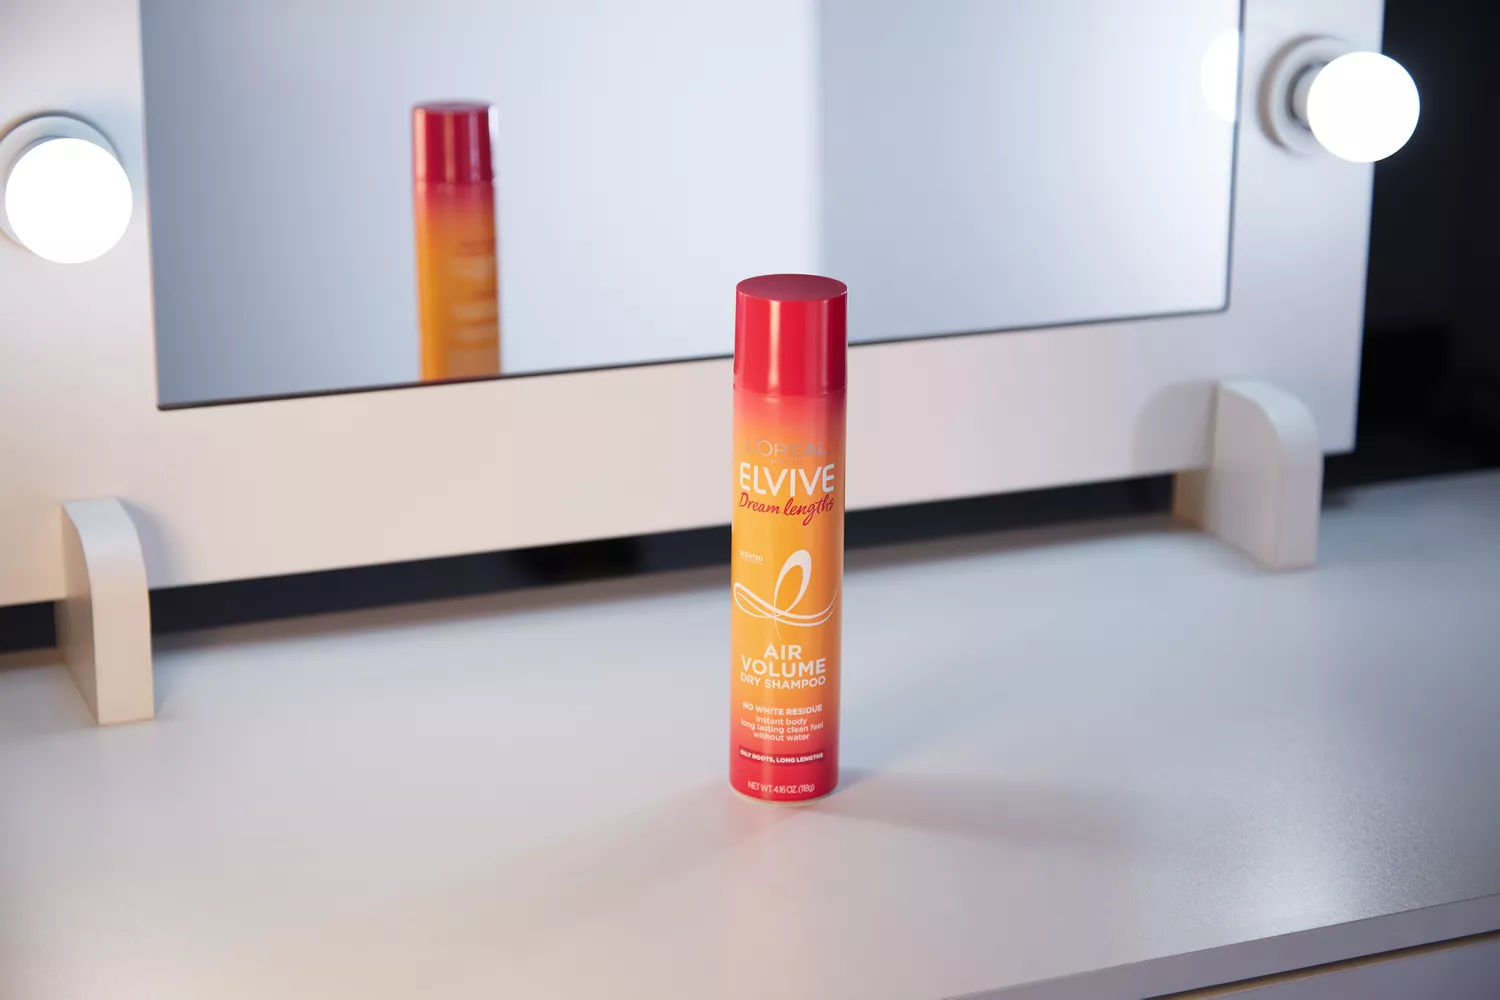 Other Dry Shampoos for Oily Hair we Tested: L'Oréal Paris Elvive Dream Lengths Air Volume Dry Shampoo